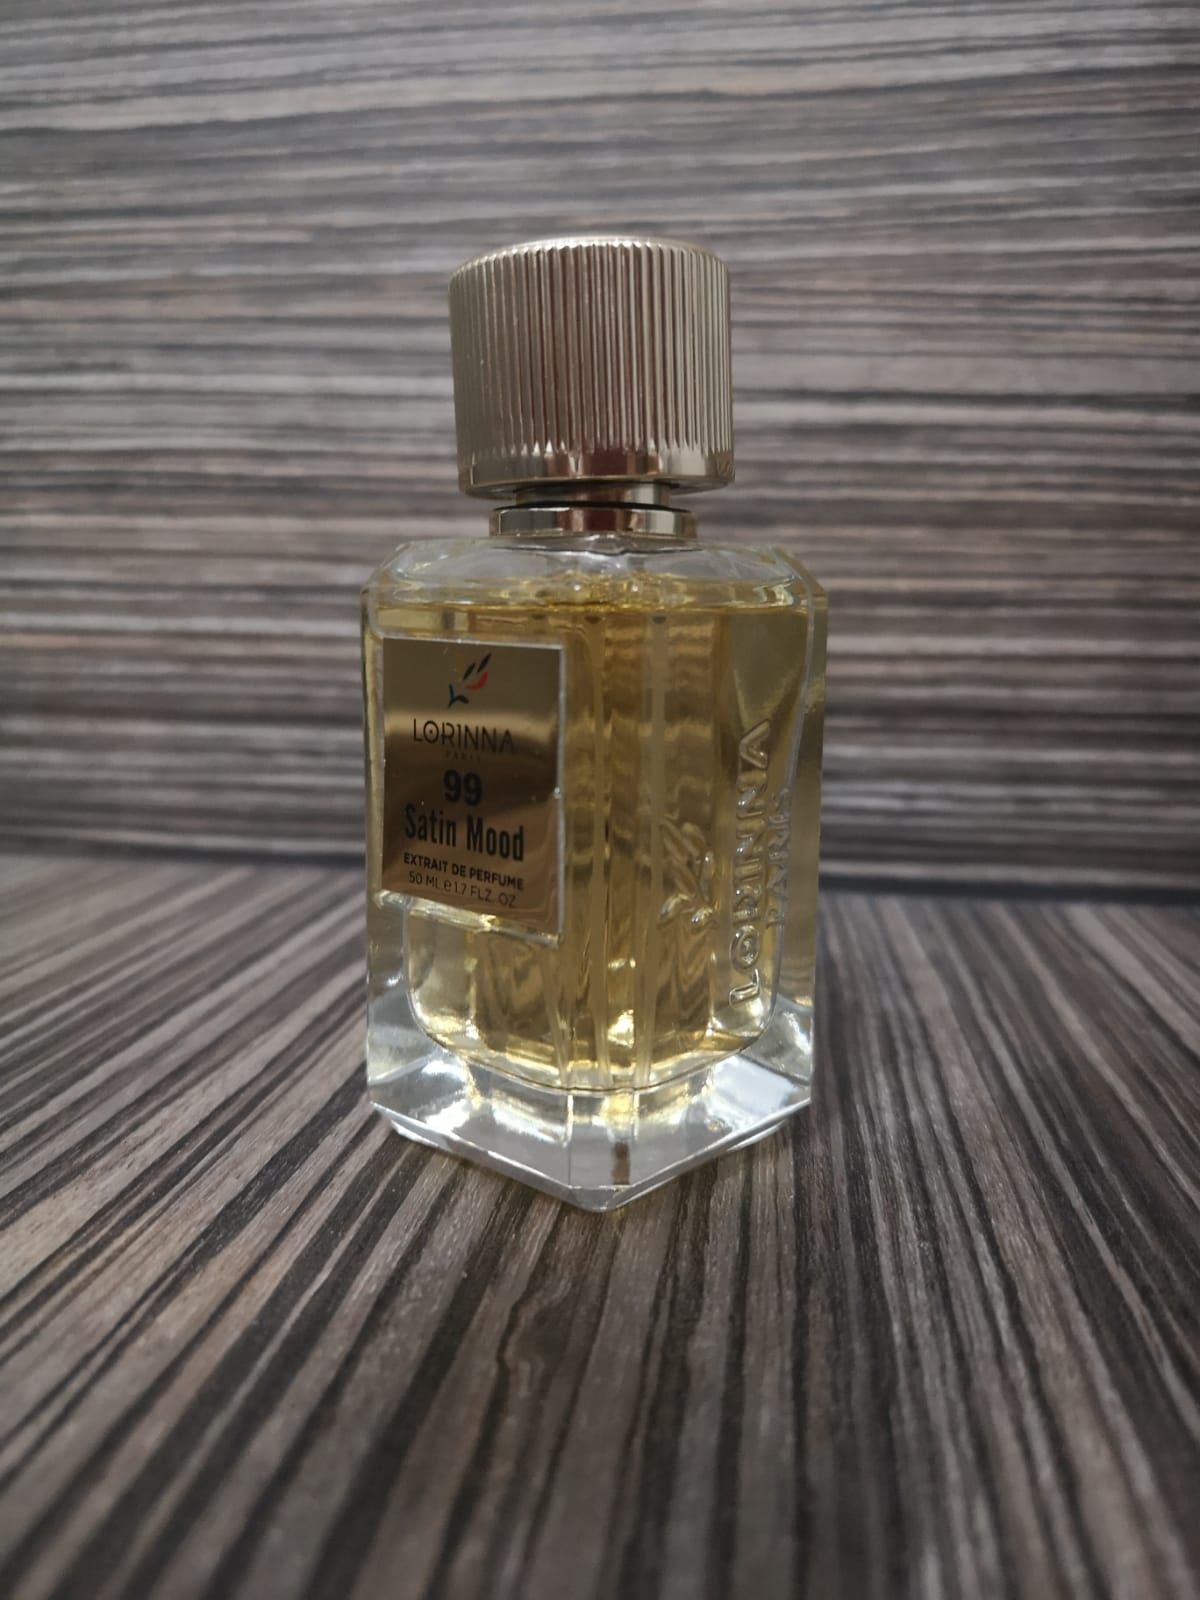 Extract parfum Satin Mood, no99